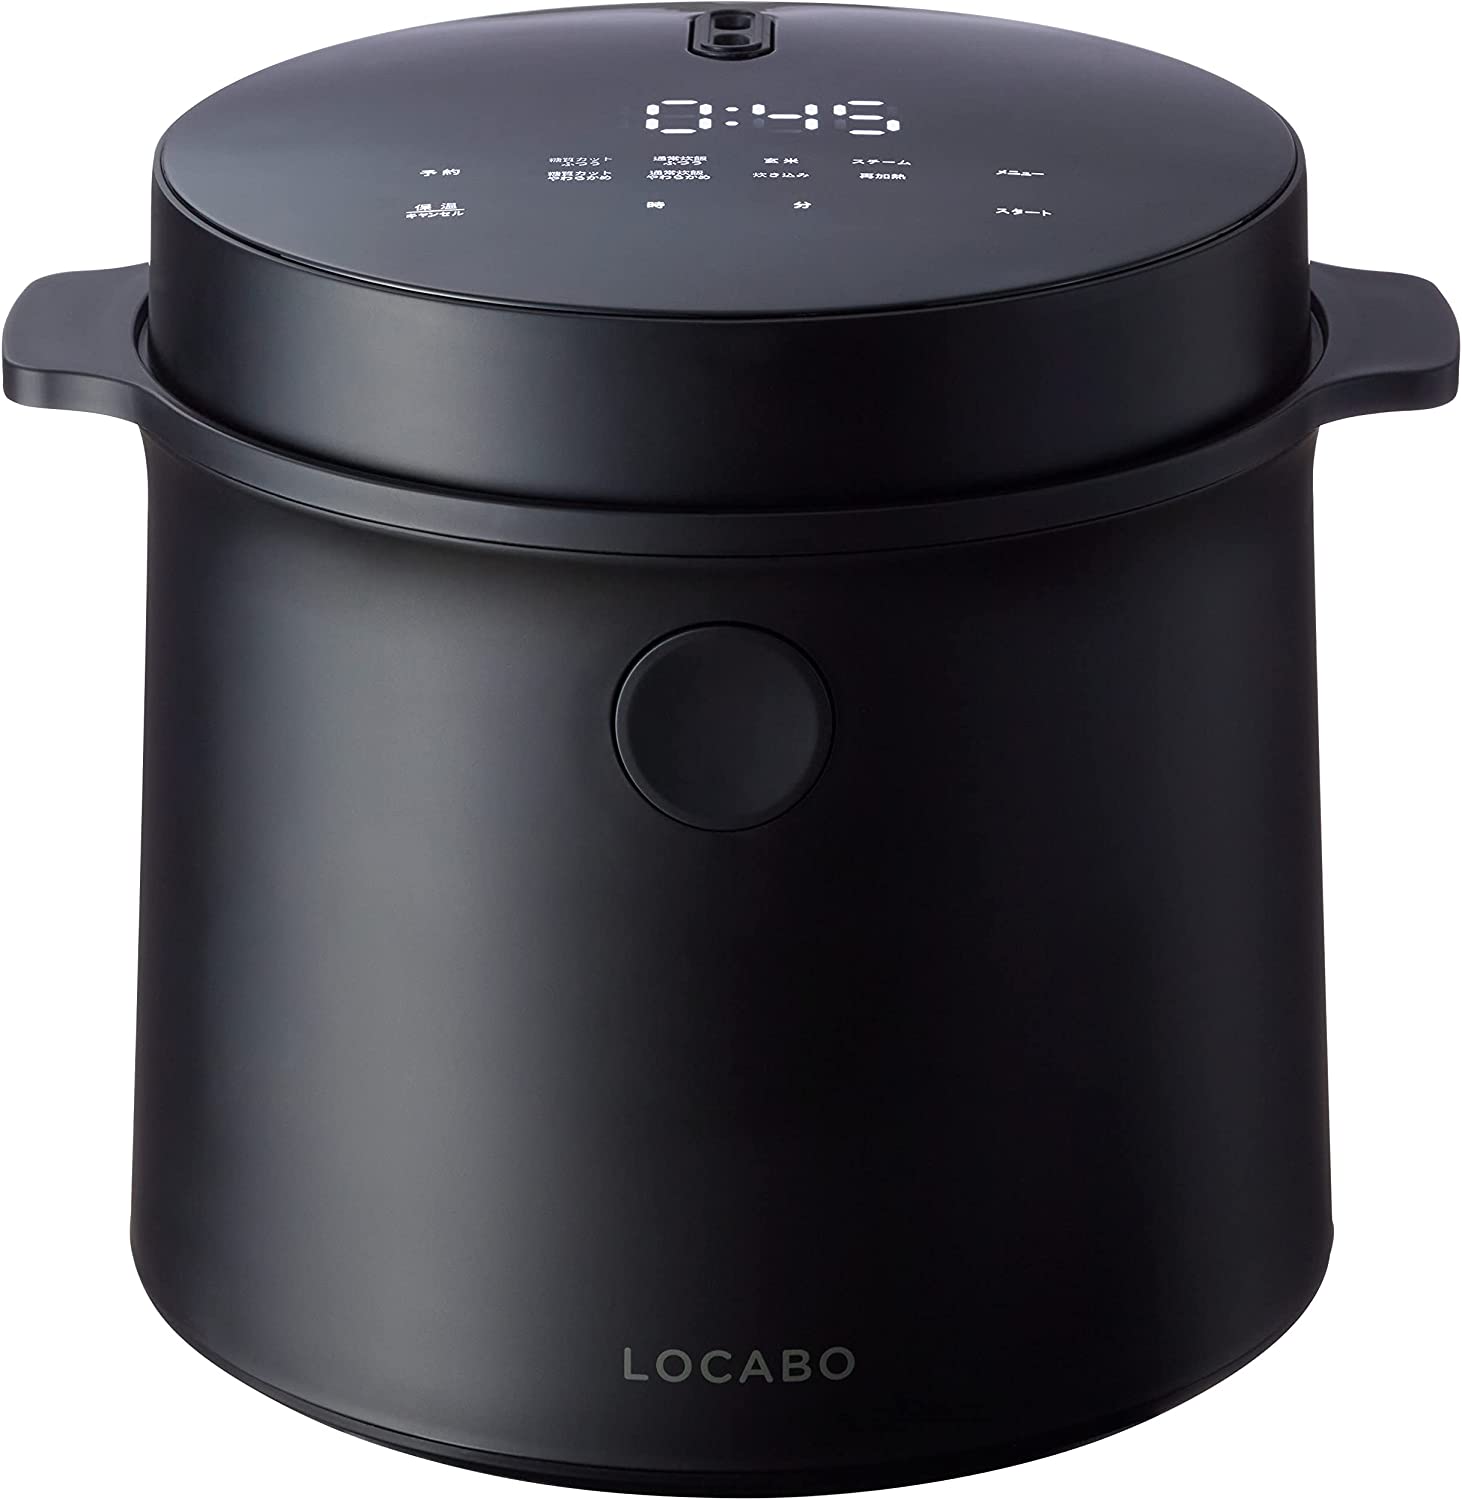 LOCABO ロカボ最新モデル炊飯器 滅茶苦茶人気カラー「ホワイト」 - 炊飯器